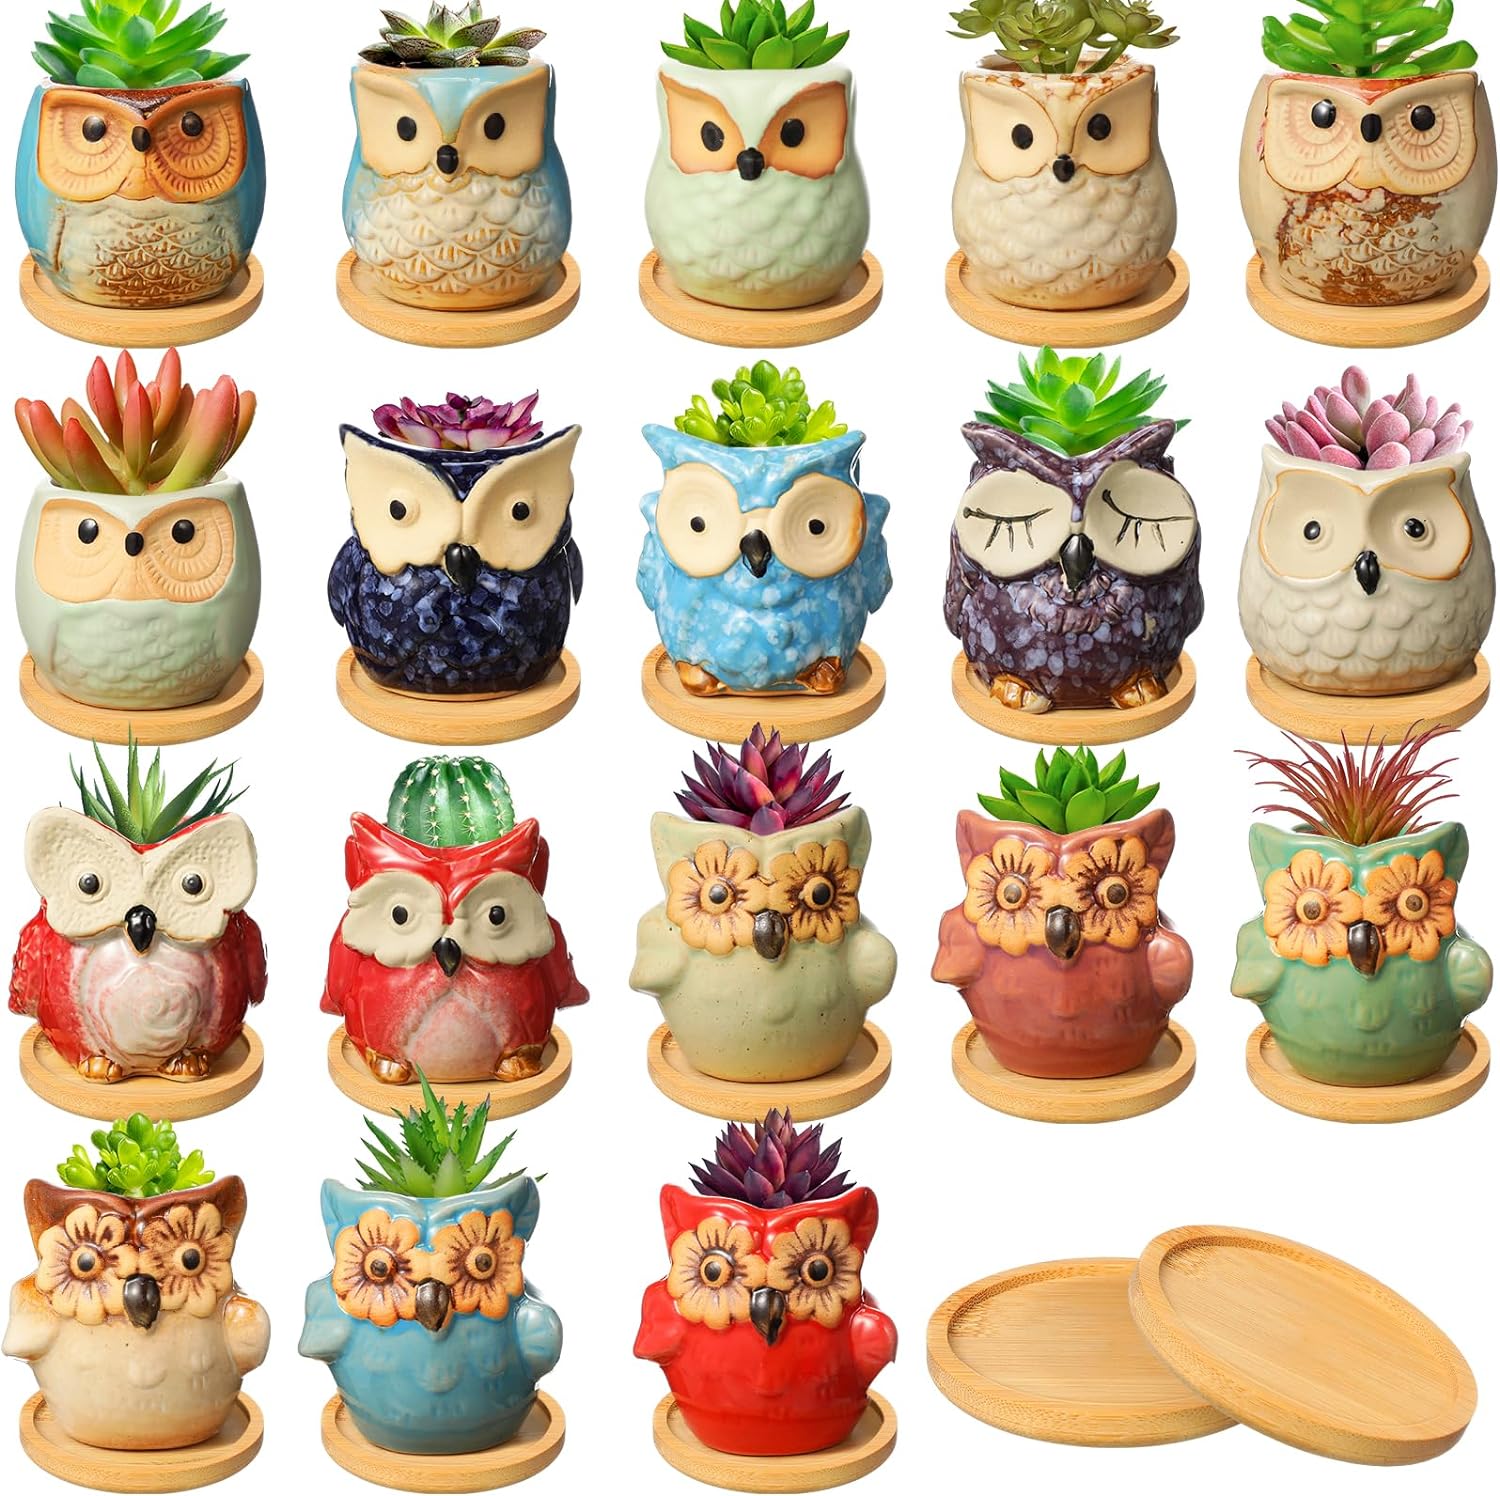 Umigy 18 Pcs Succulent Plant Pots Bulk Owl Ceramic Animal Owl Planters, Cactus Plant Pot Small Flower Pot with Drainage Hole Bamboo Tray Garden Pots Container Home Decoration